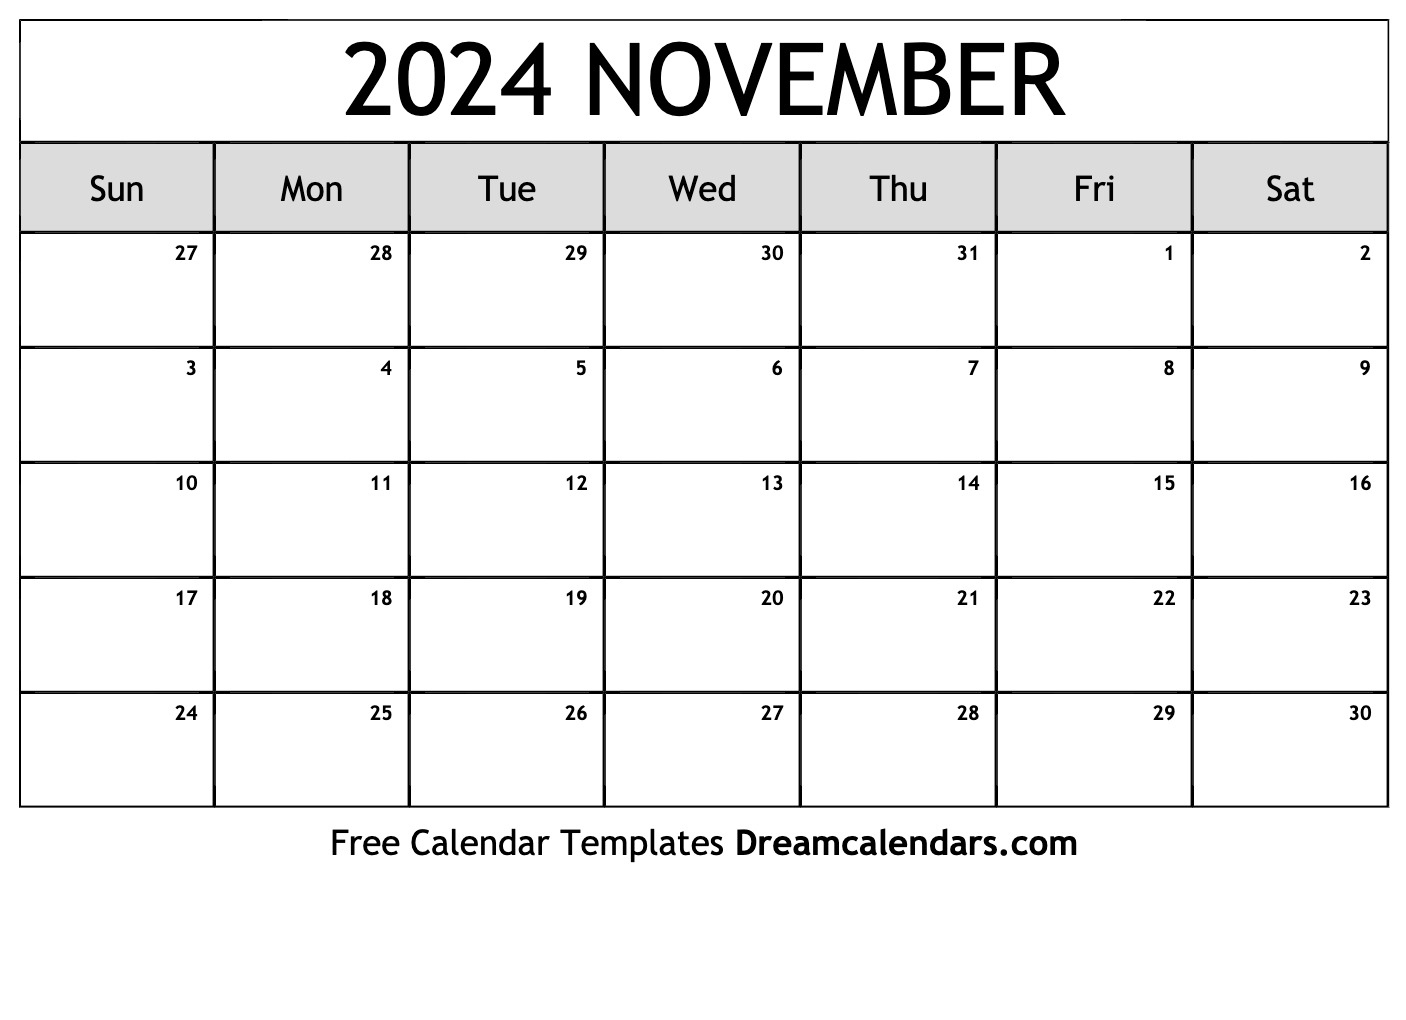 November 2024 Calendar | Free Blank Printable With Holidays pertaining to Free Printable Calendar 2024 November